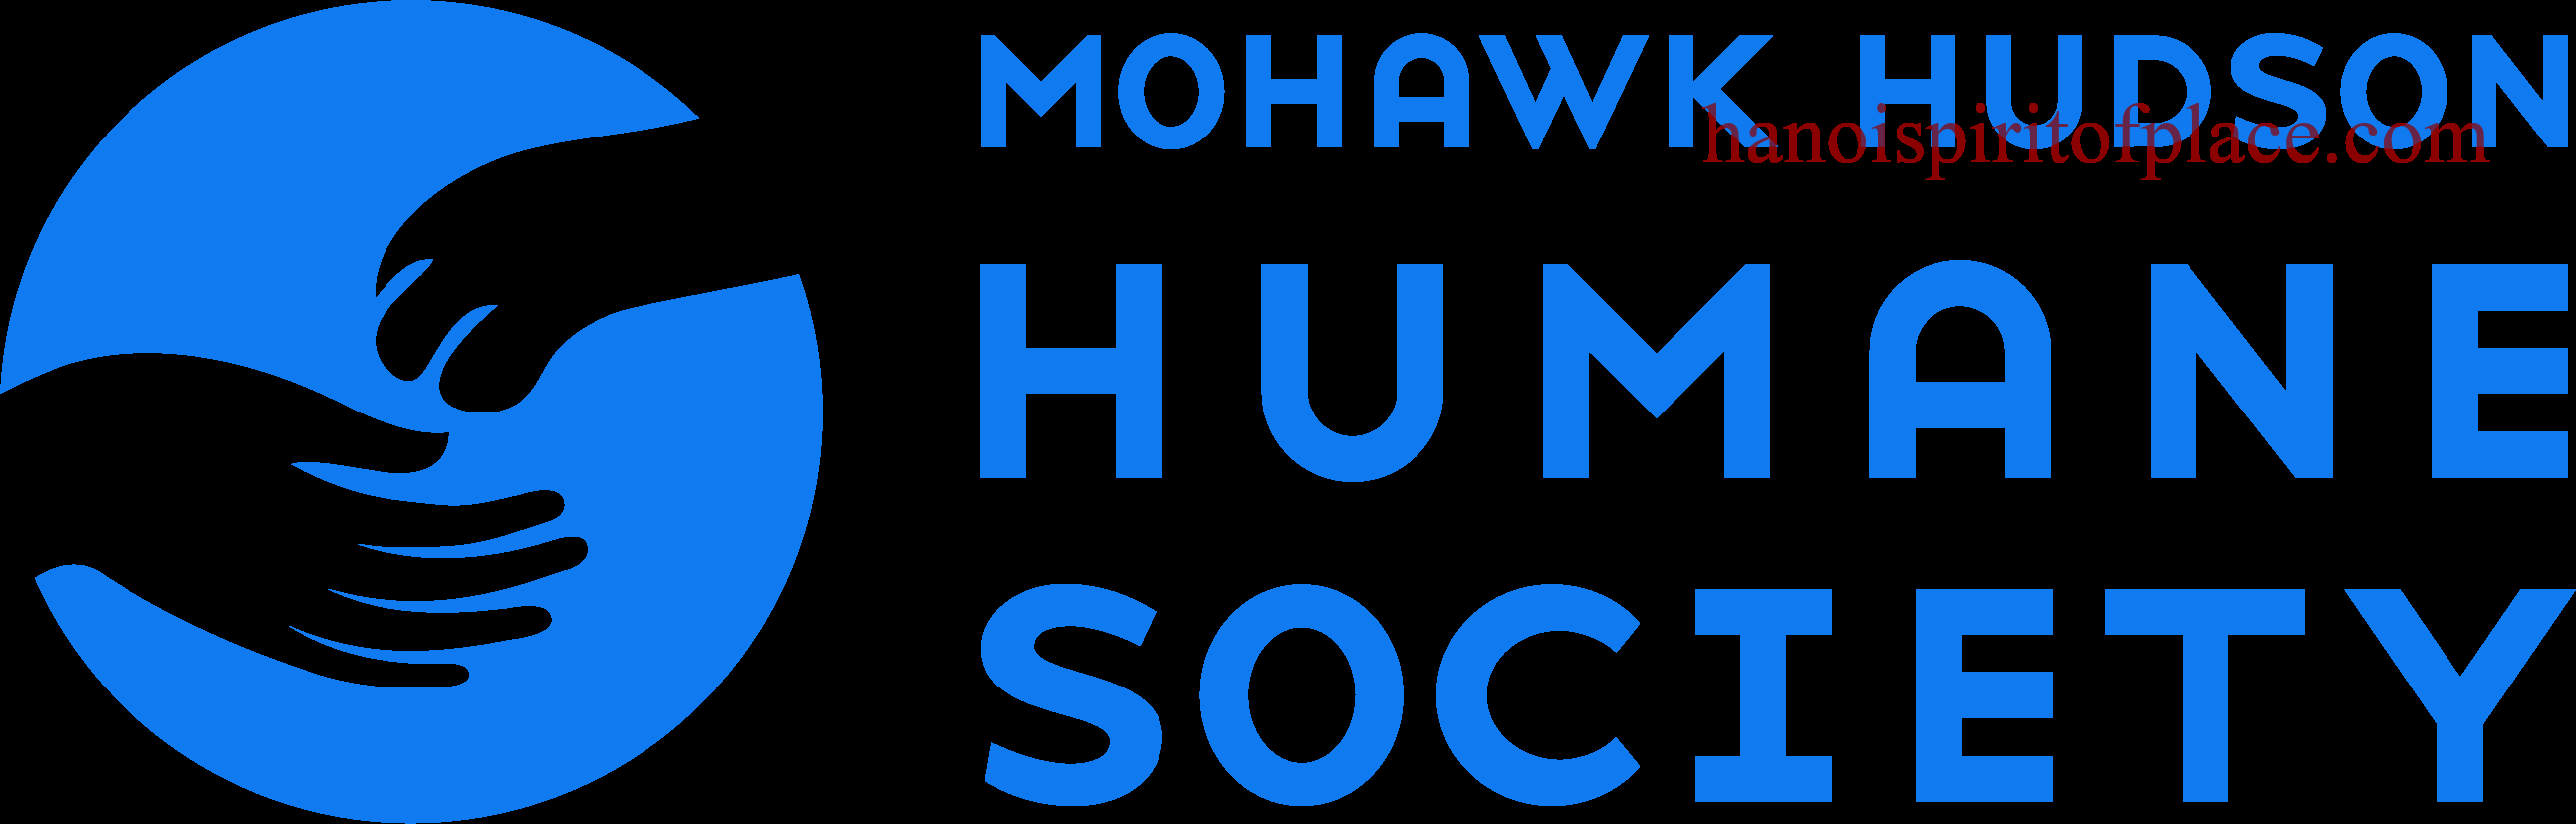 Importance of the Mohawk Hudson Humane Society